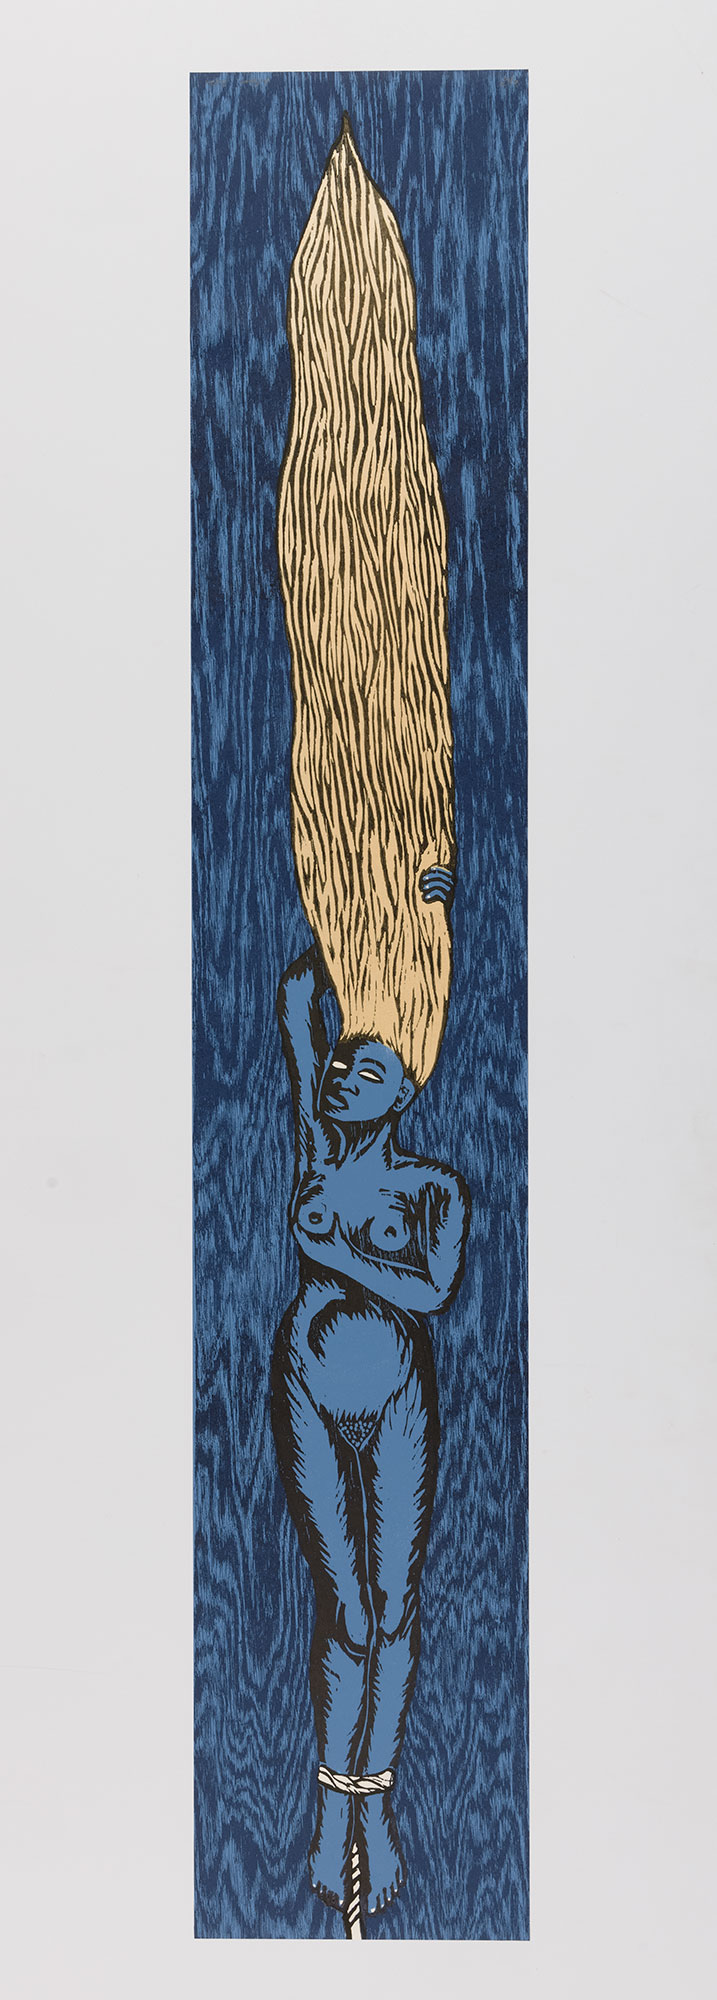 Alison Saar / 
Blonde Dreams, 2021 / 
woodcut and screen print / 
66 x 12 in. (167.6 x 53.3 cm) / 
Edition 4 of 30